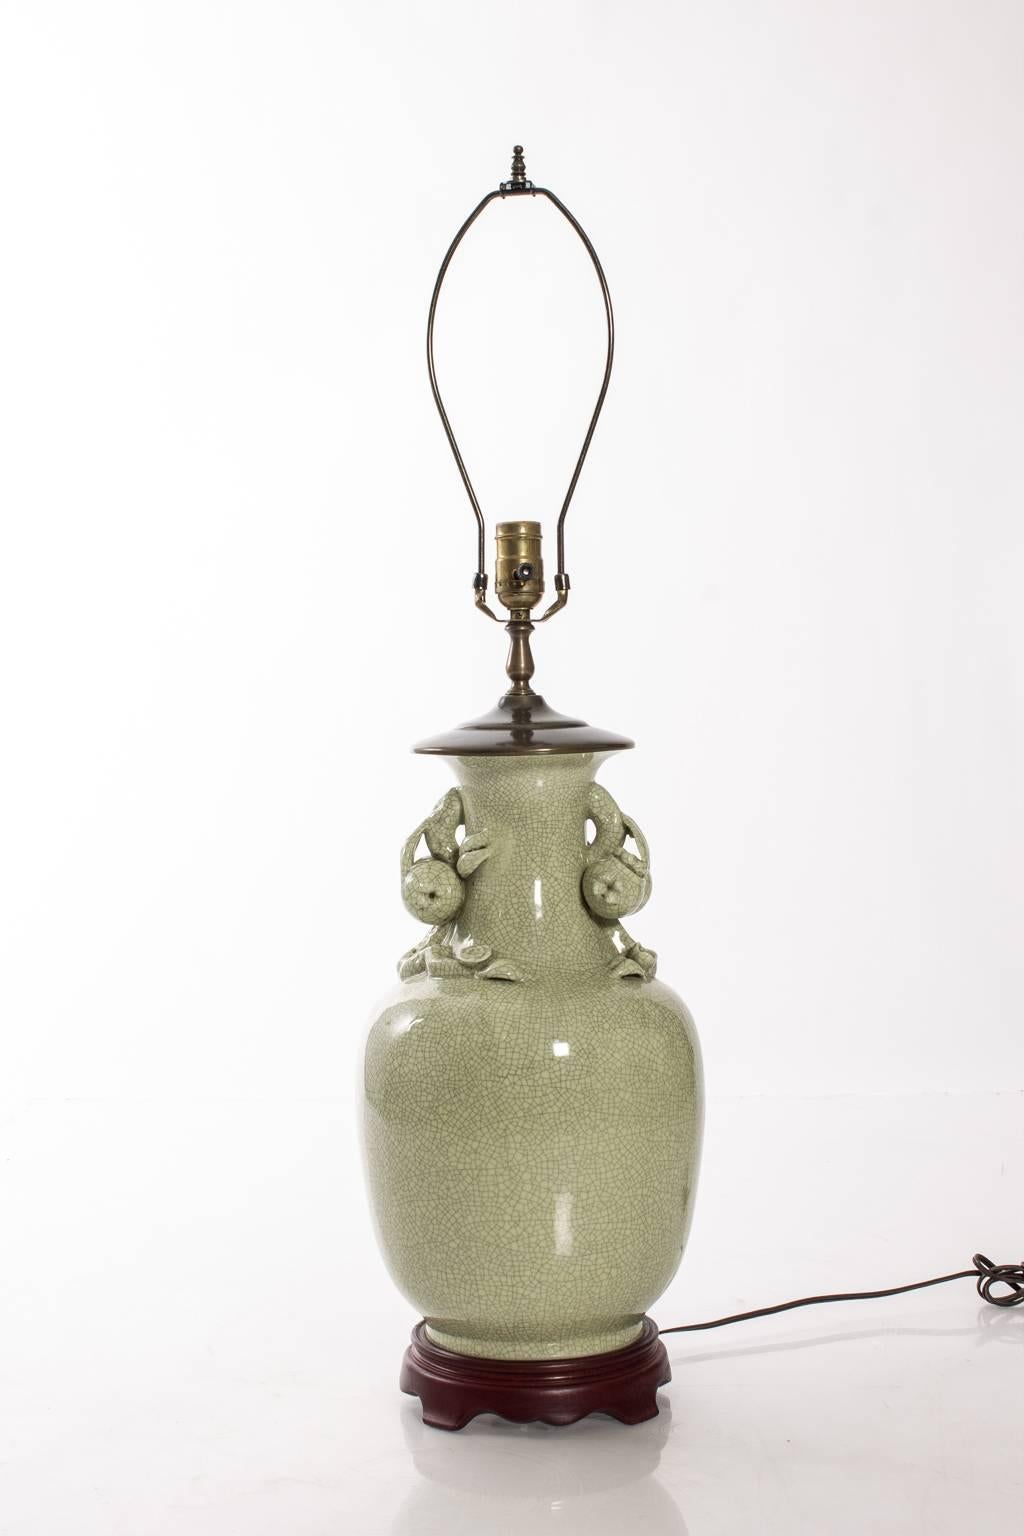 Ceramic celadon table lamp with decorative fruit adornments.